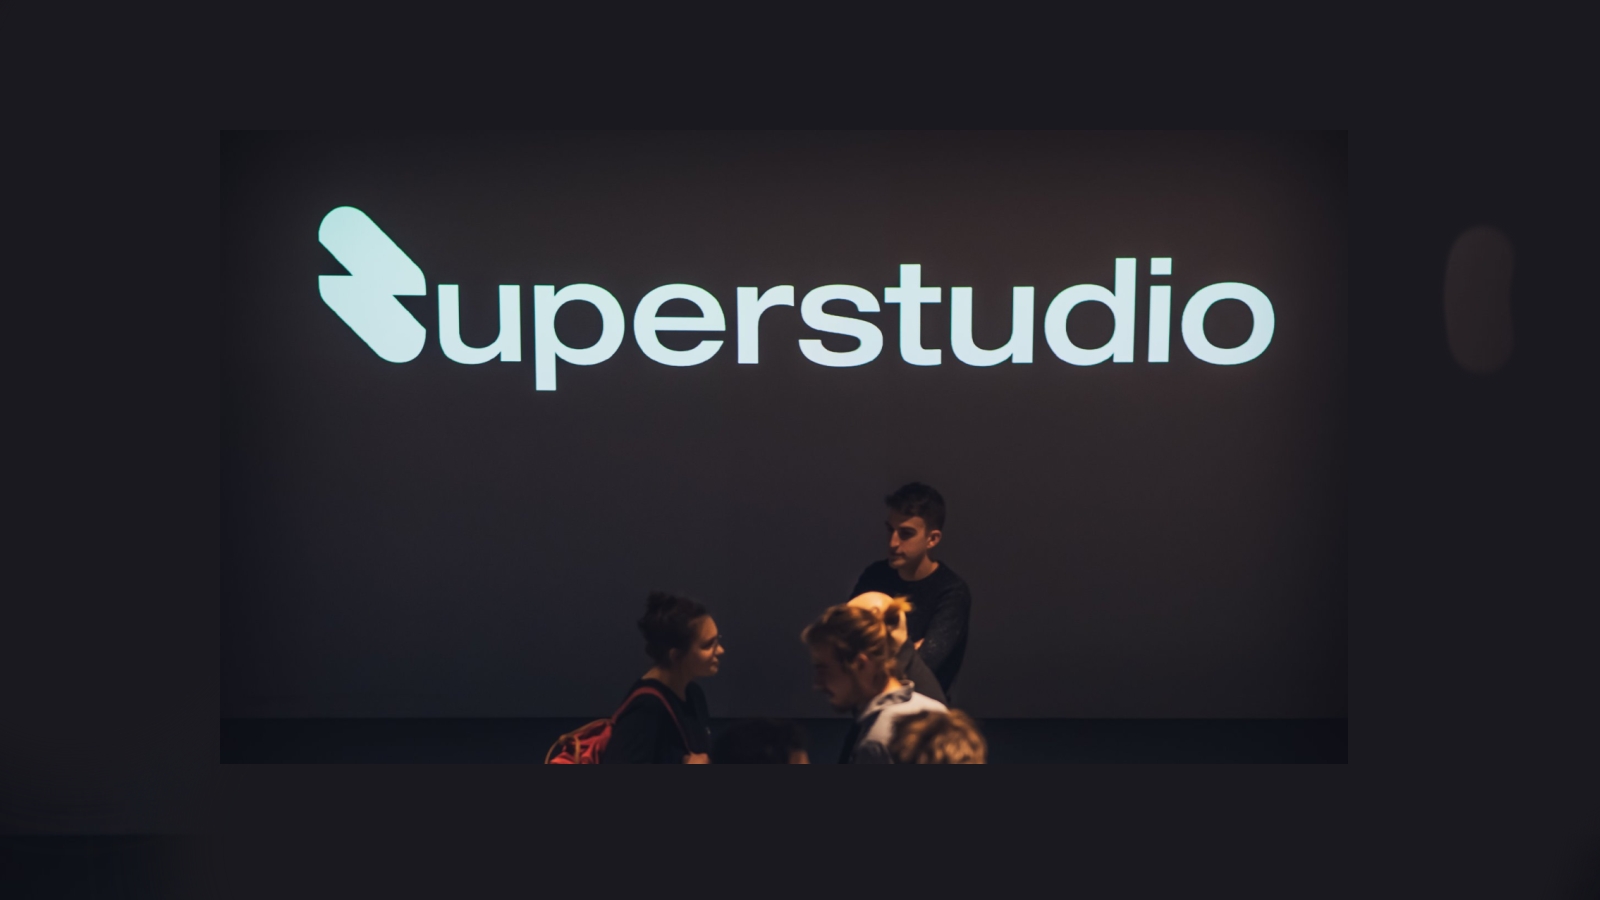 Super studio v kině Varšava